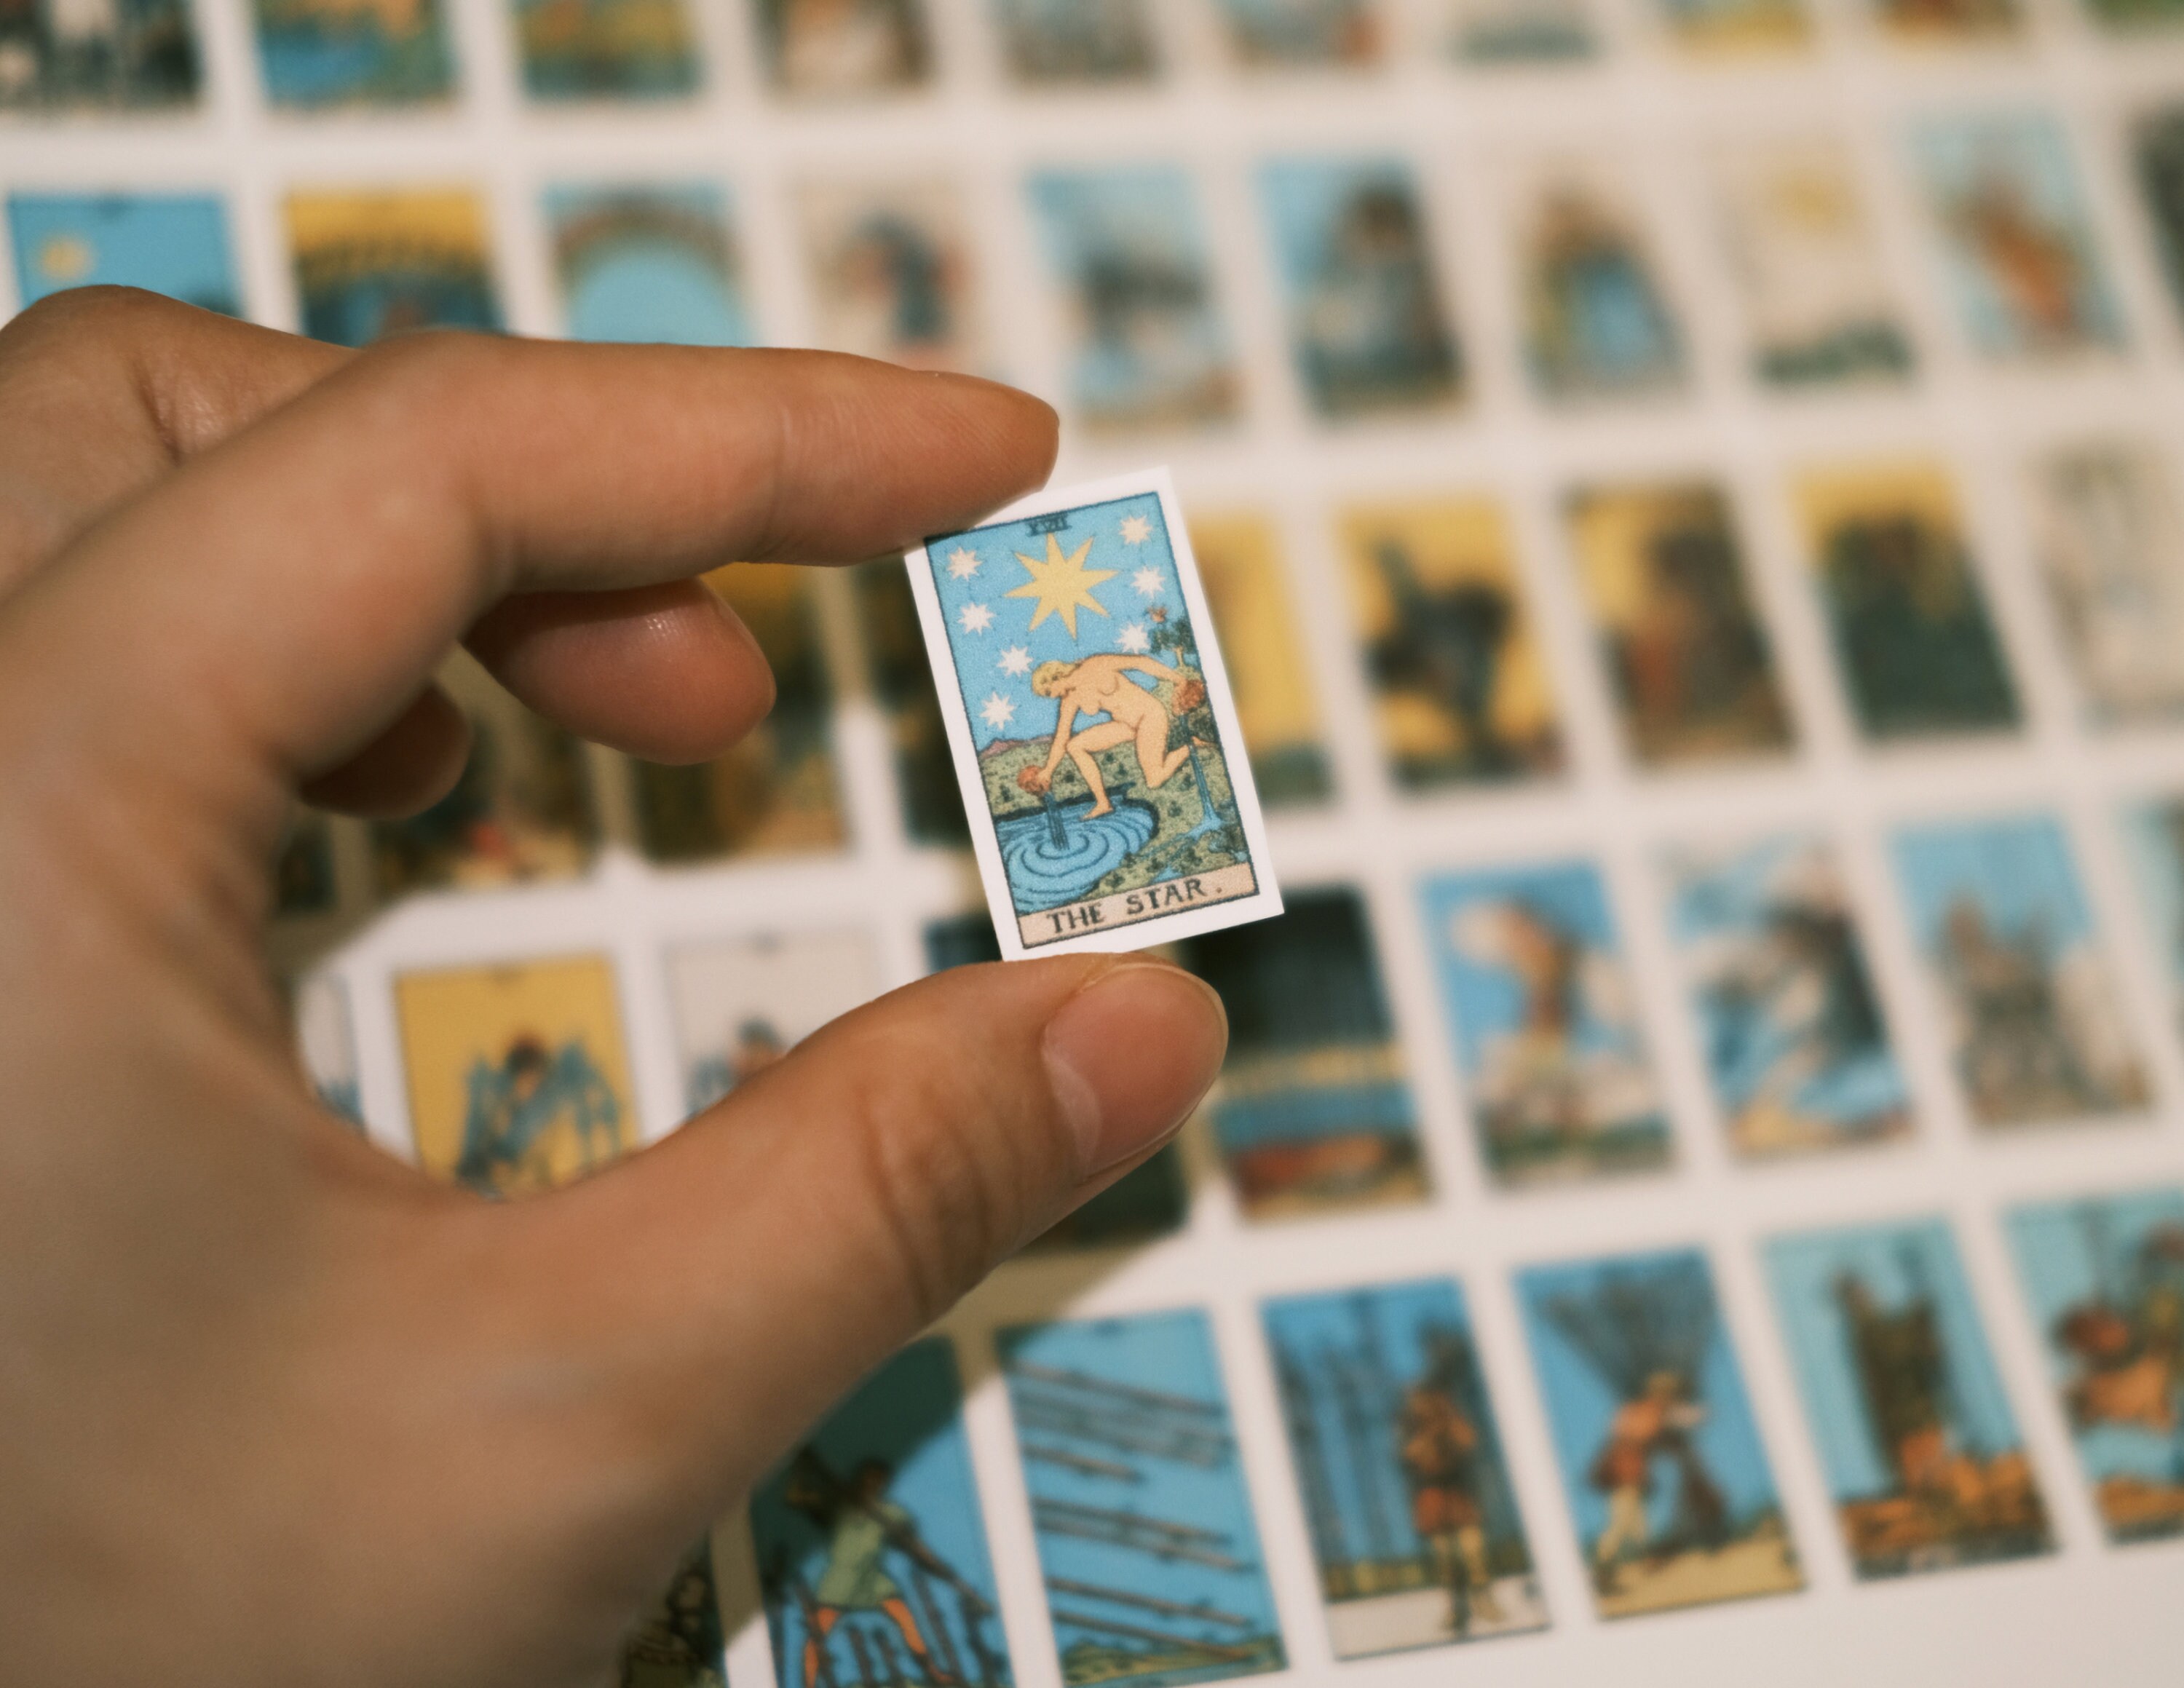 Mini Tarot Card Journal Stickers – 780 Vintage Austria